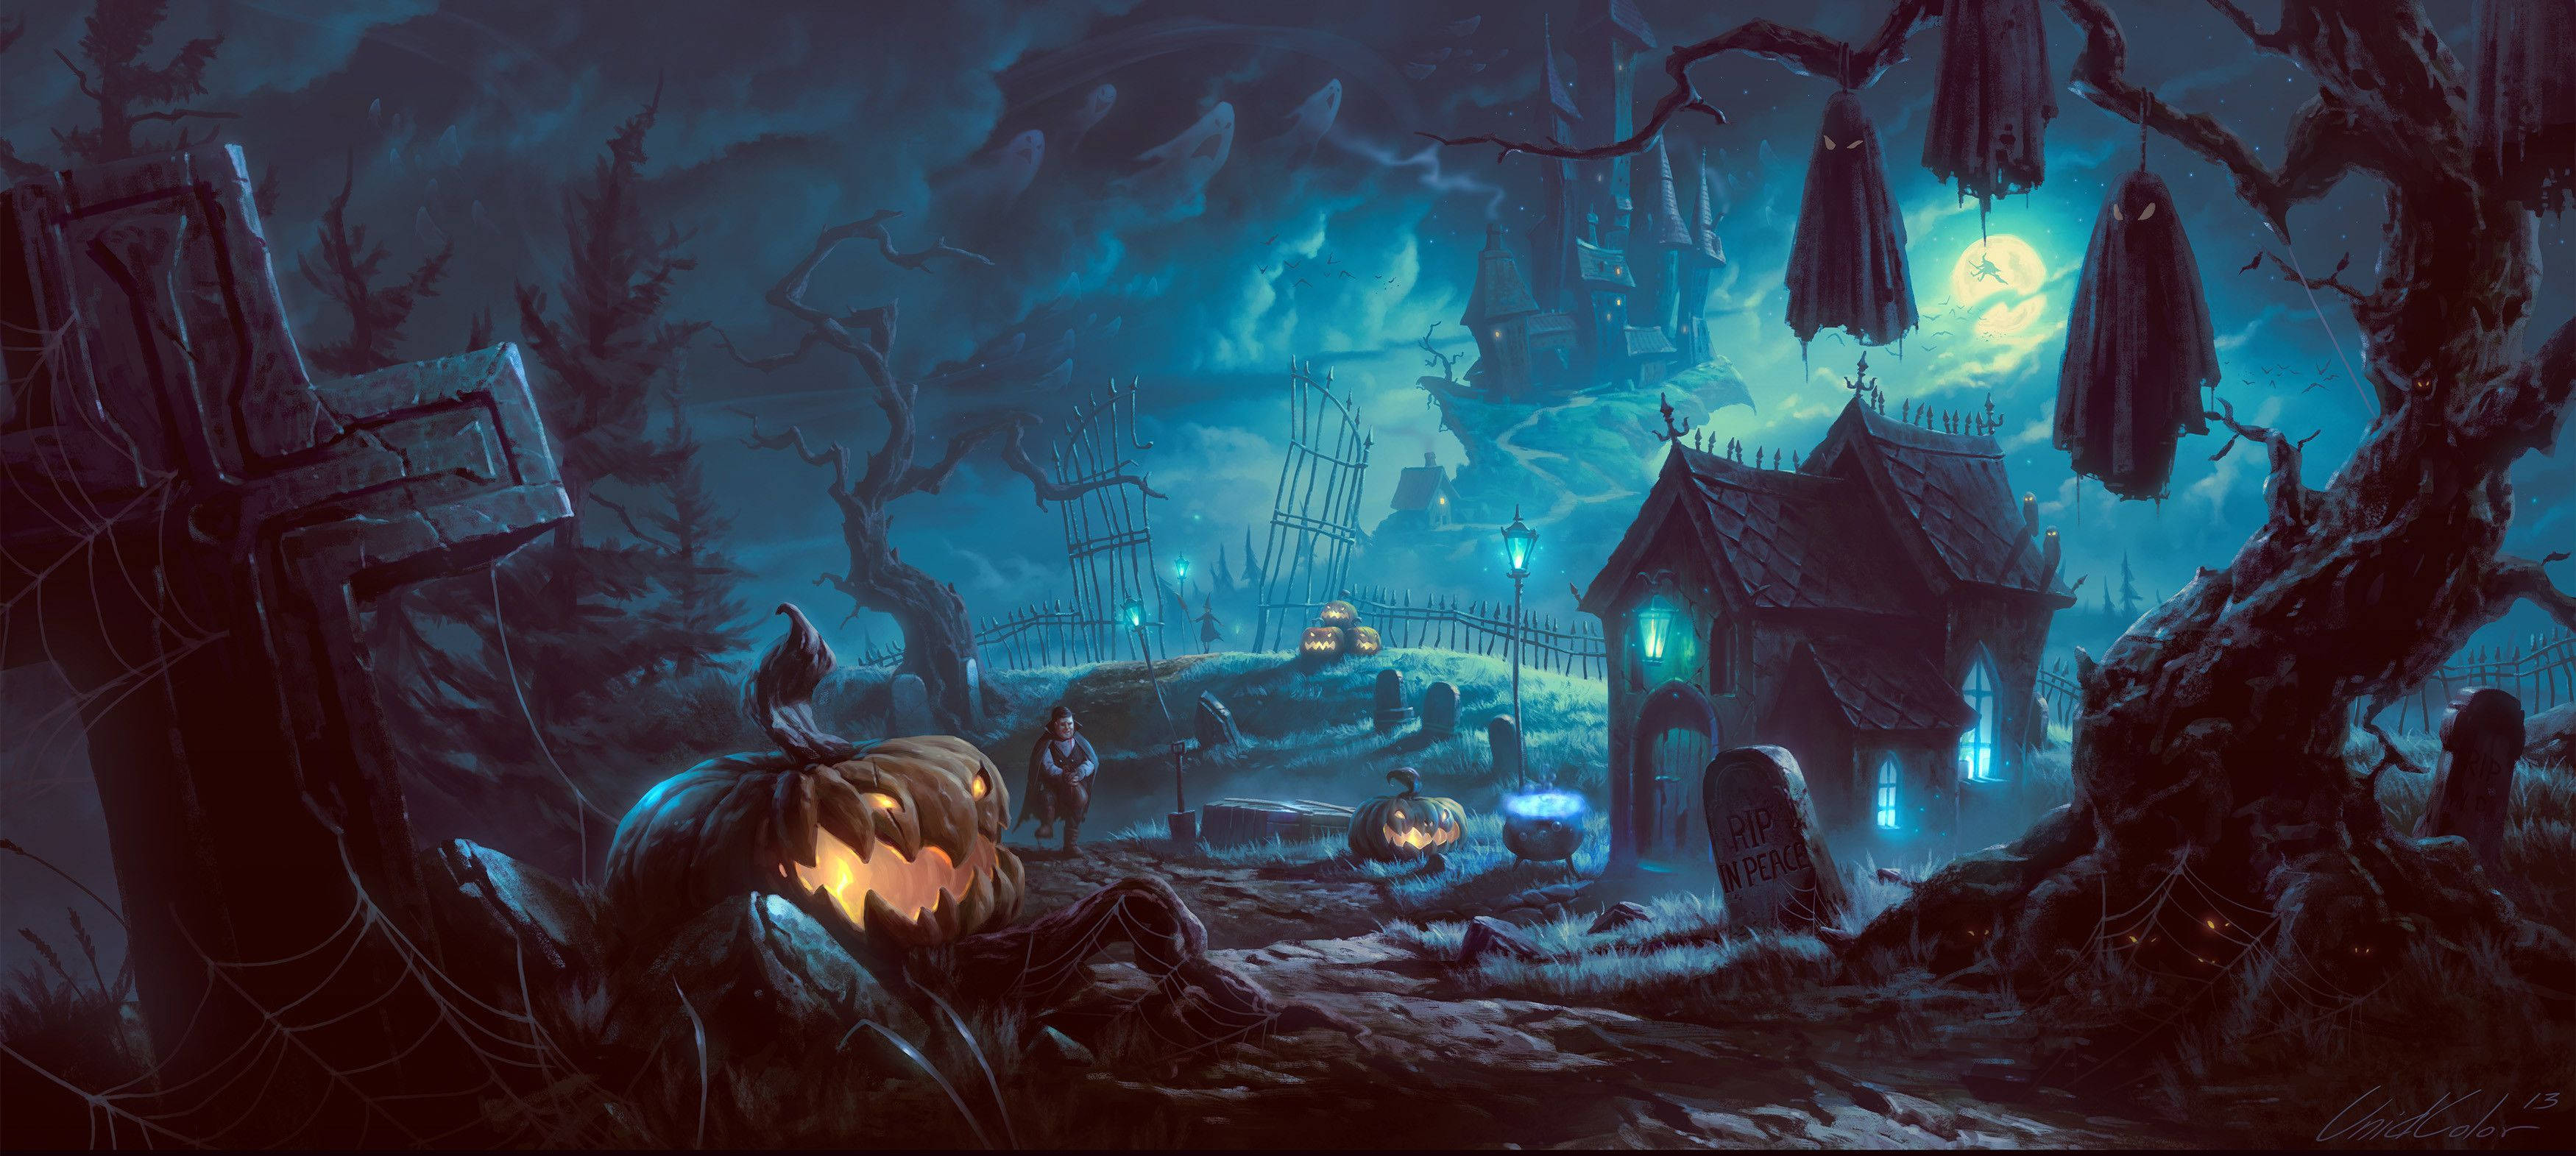 Download Scary Halloween Castle In A Graveyard Wallpaper 